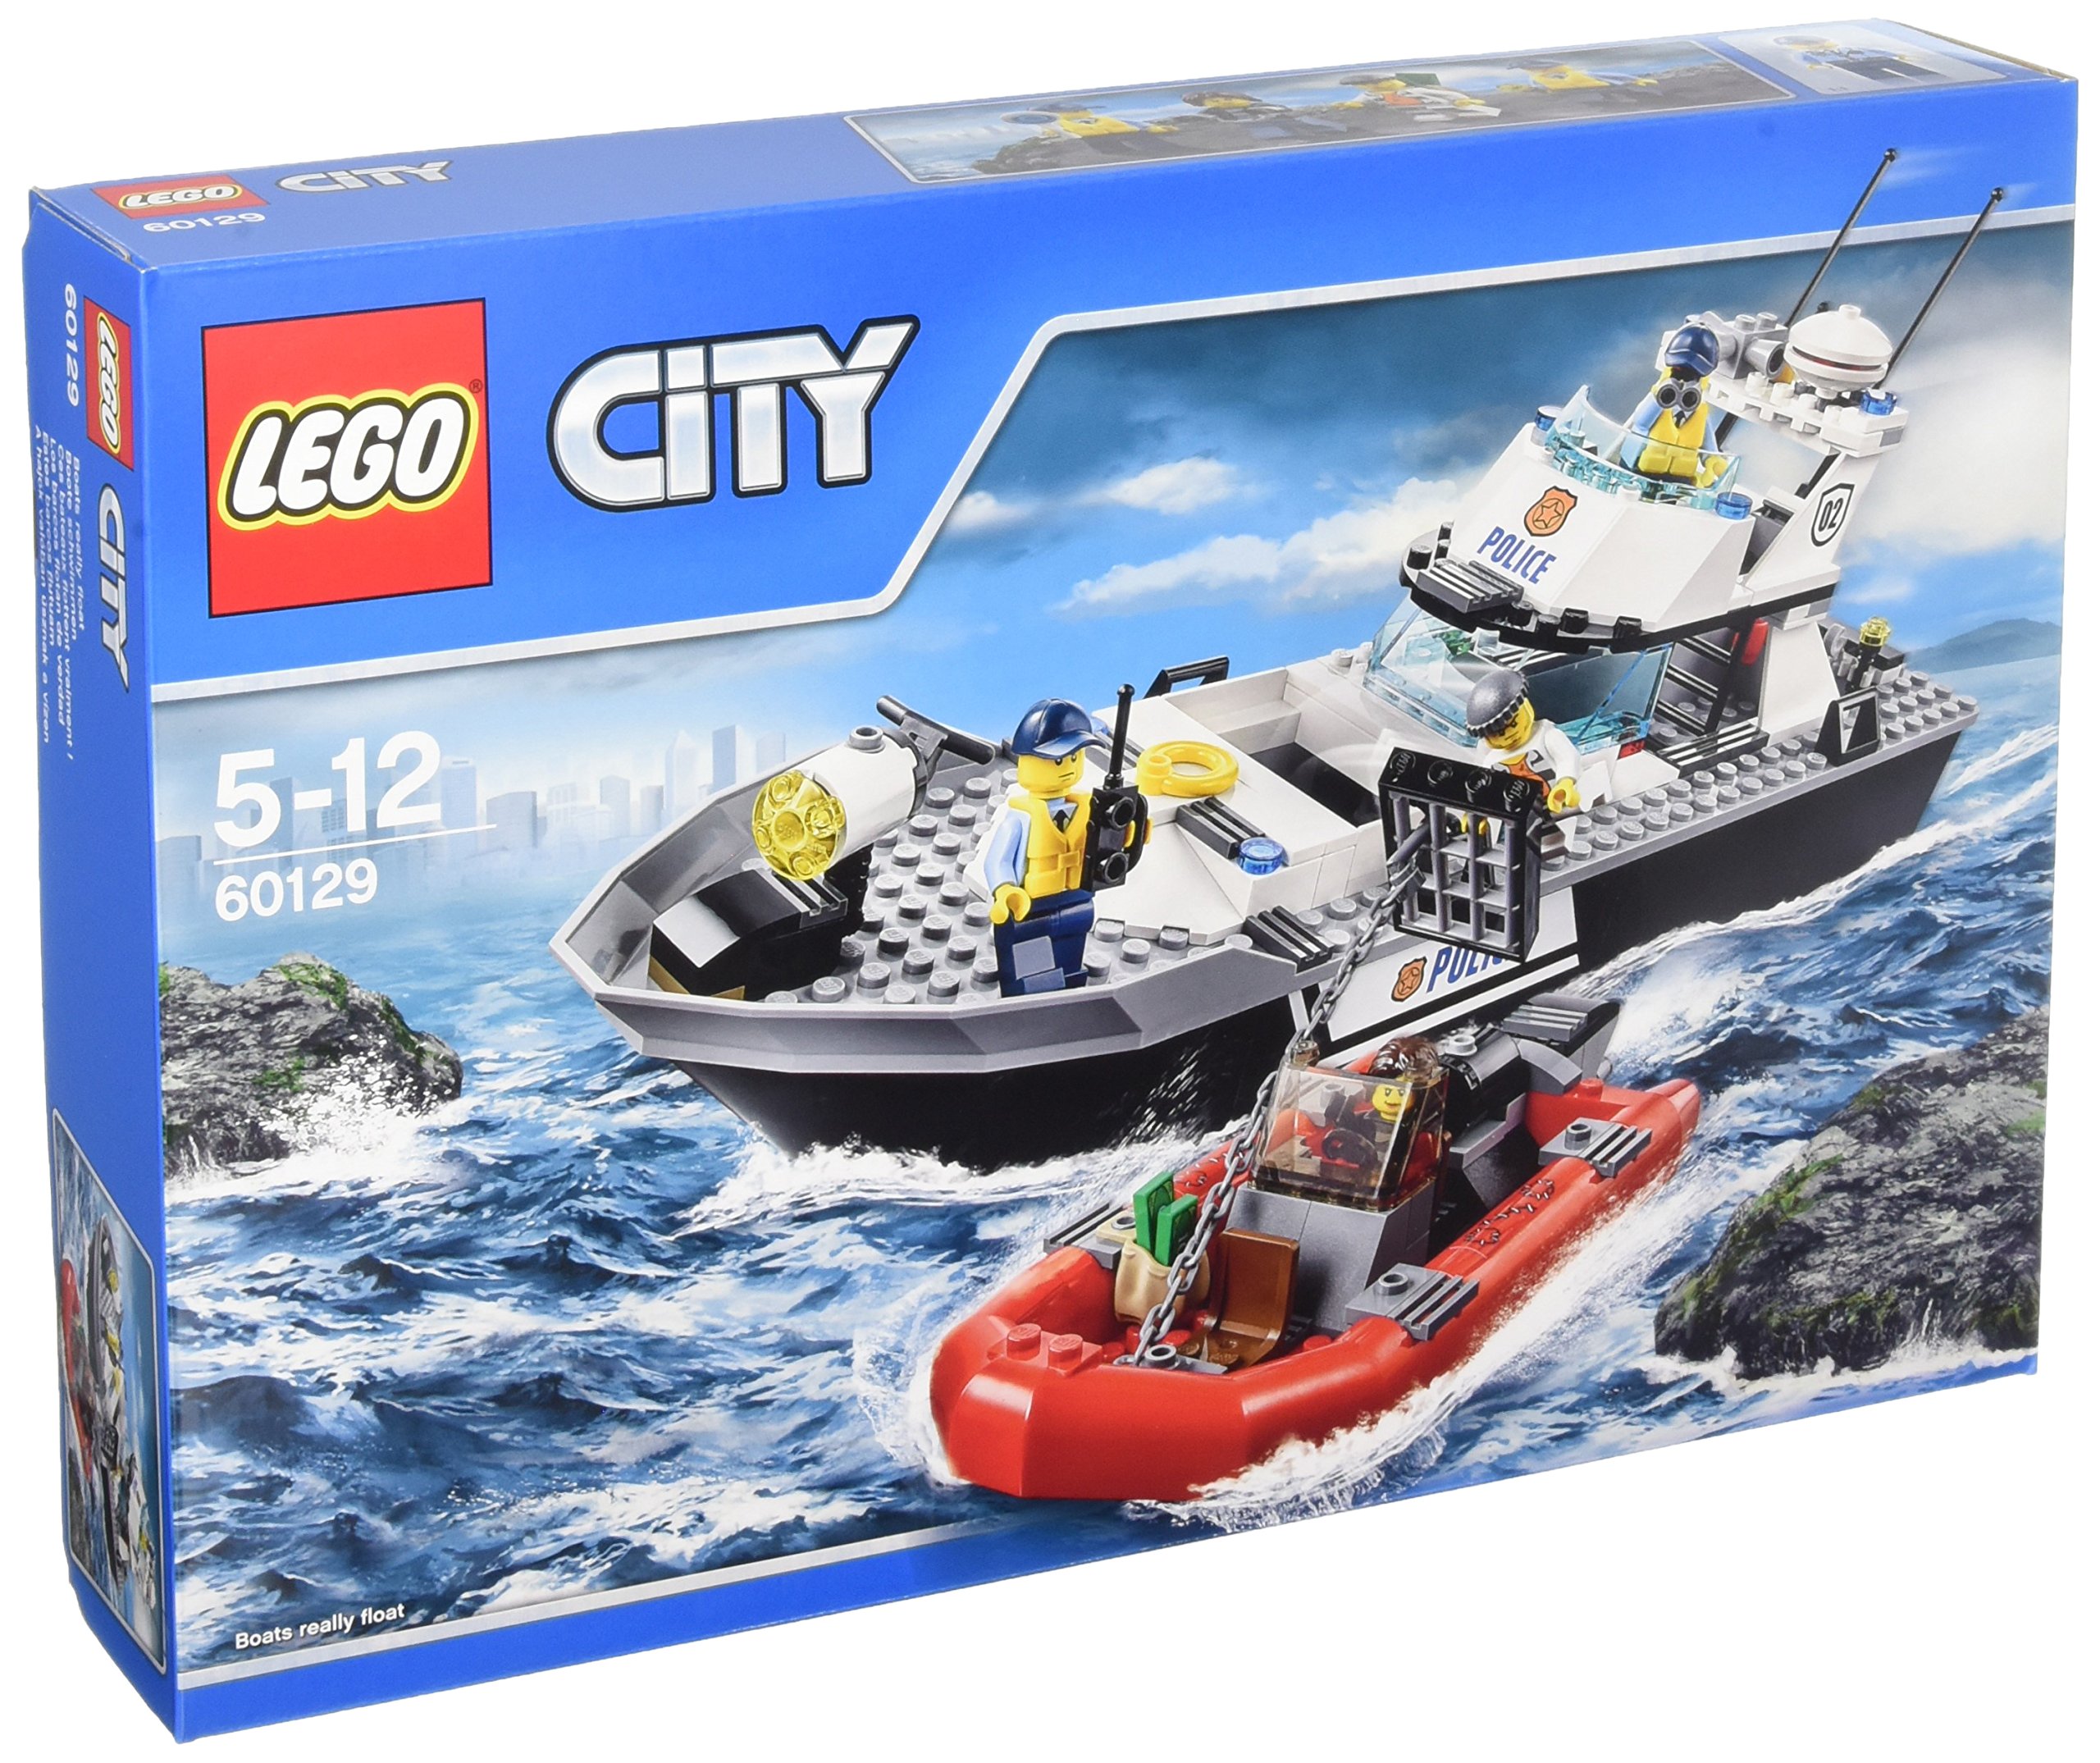 Lego City Police Police Patrol Boat Mixed